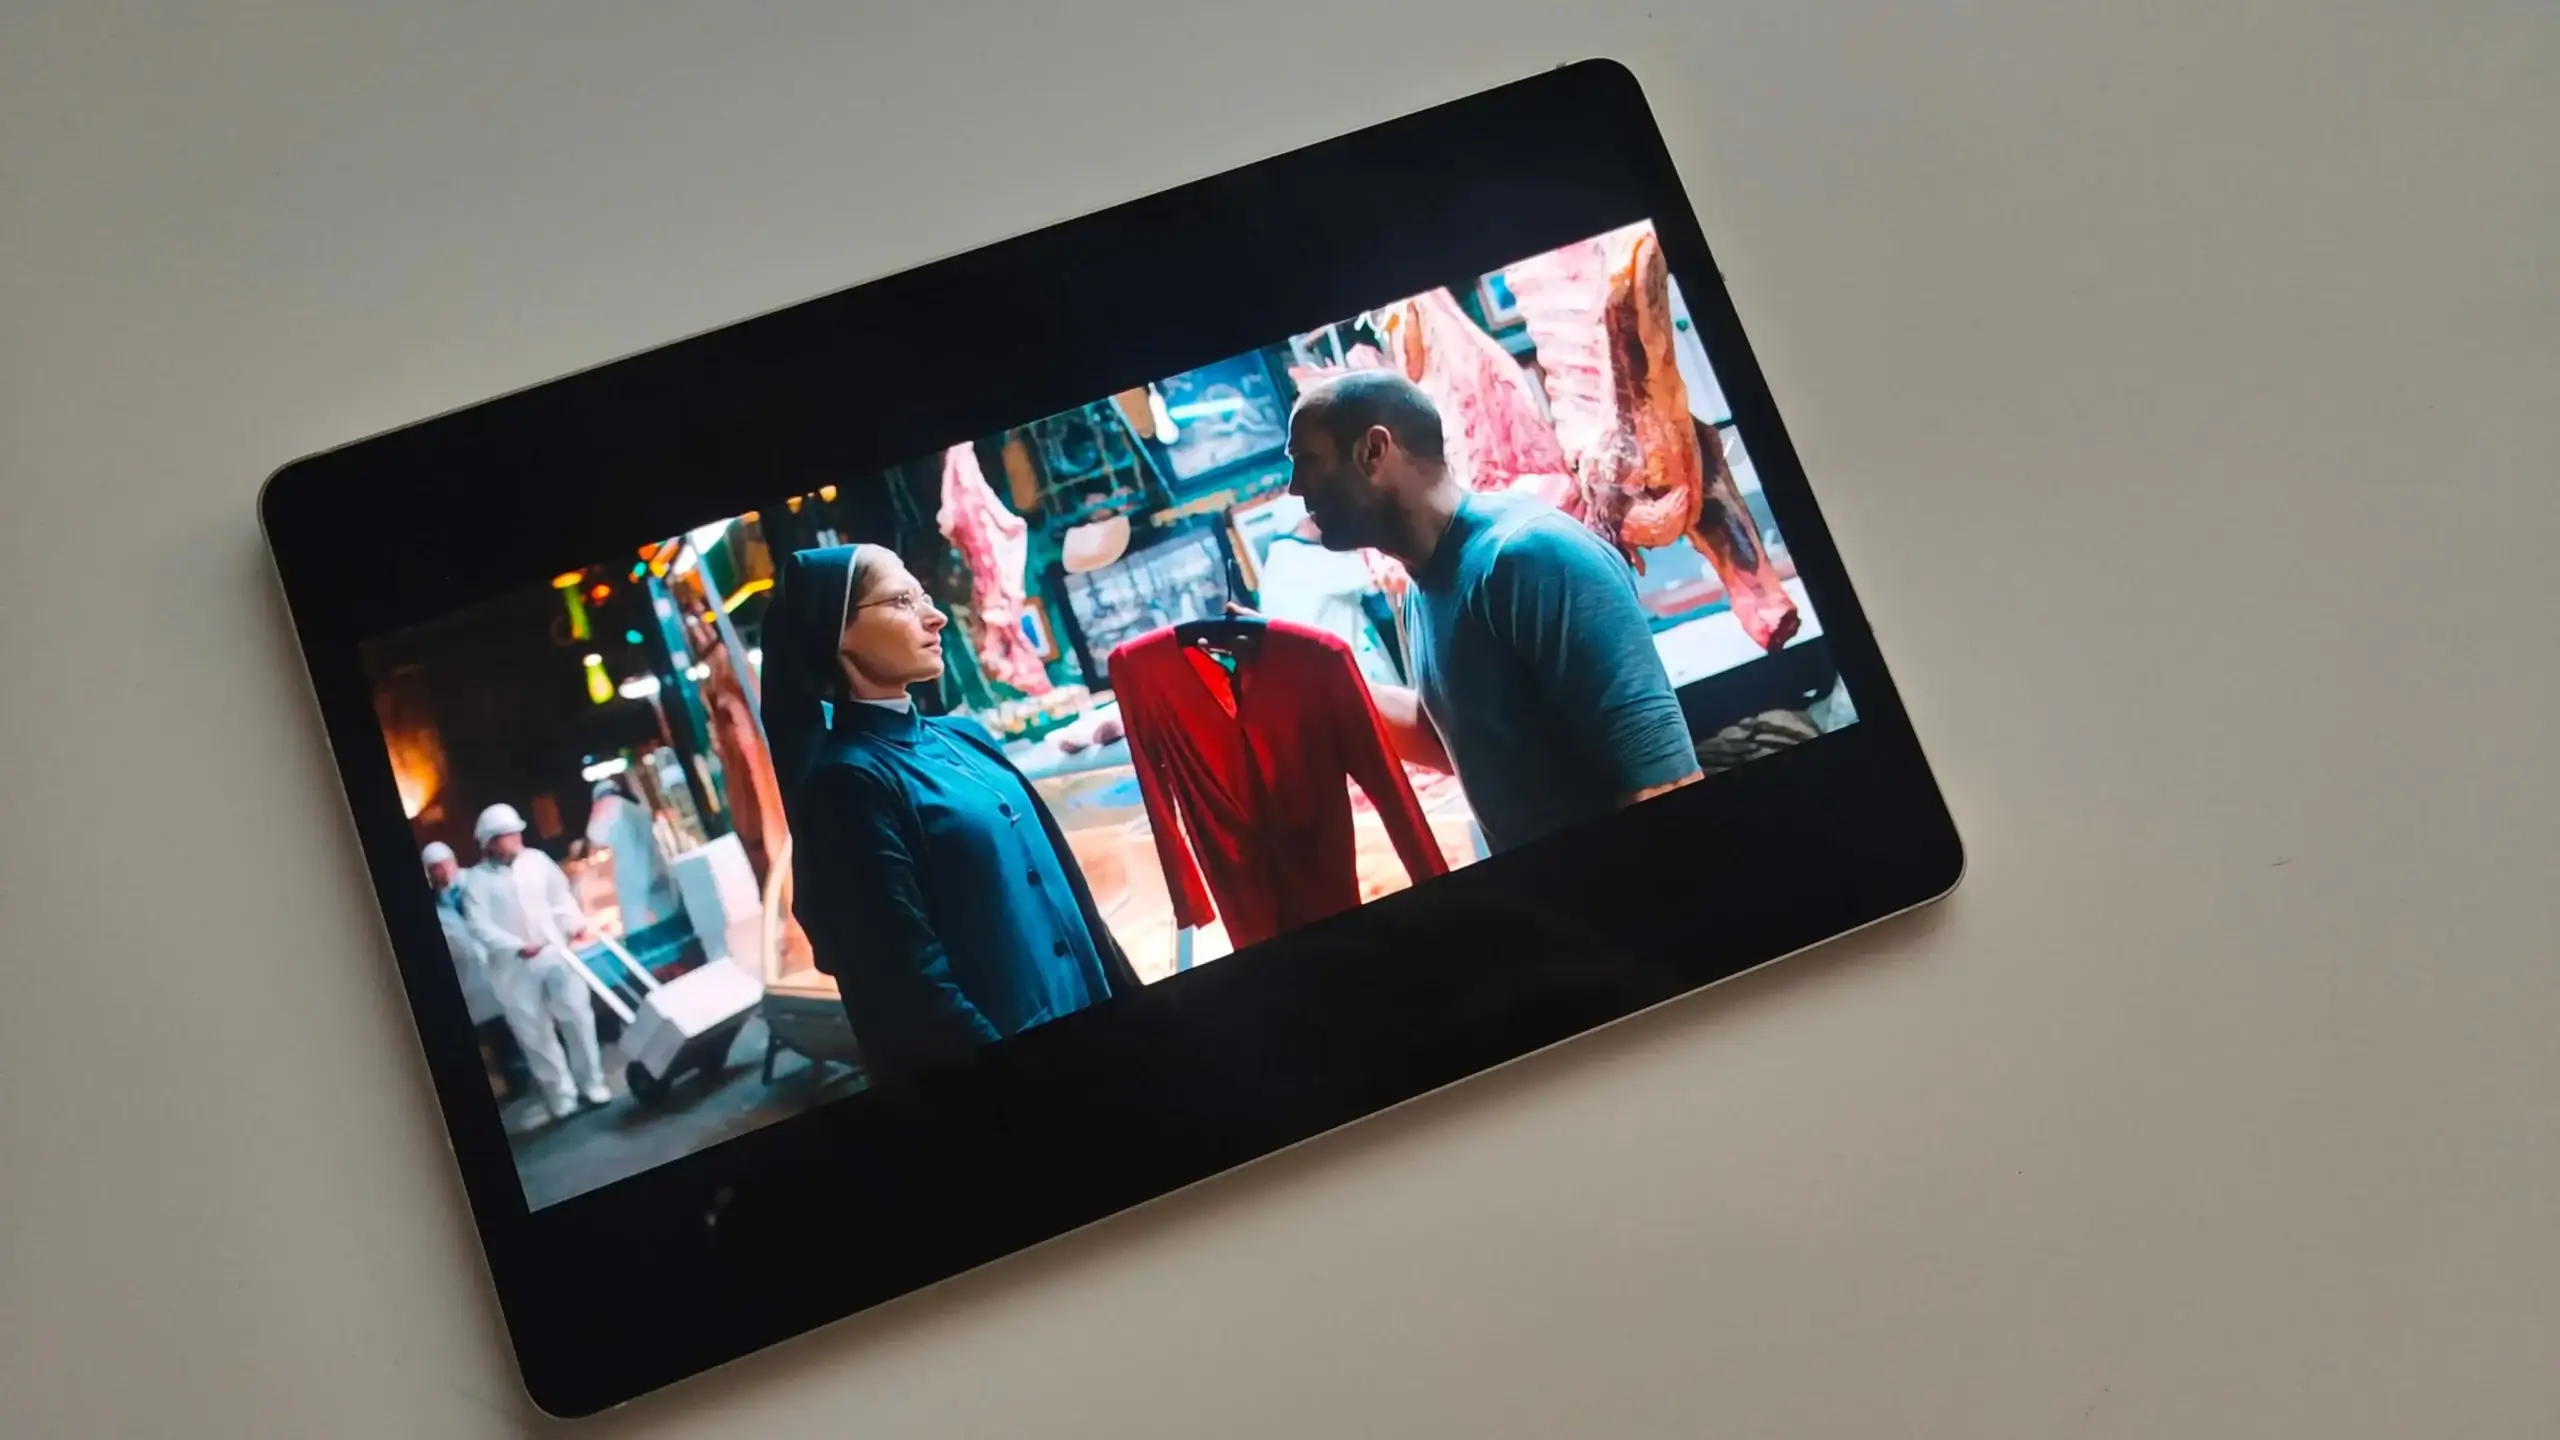 Samsung Galaxy Tab S9 playing a movie in 4K resolution